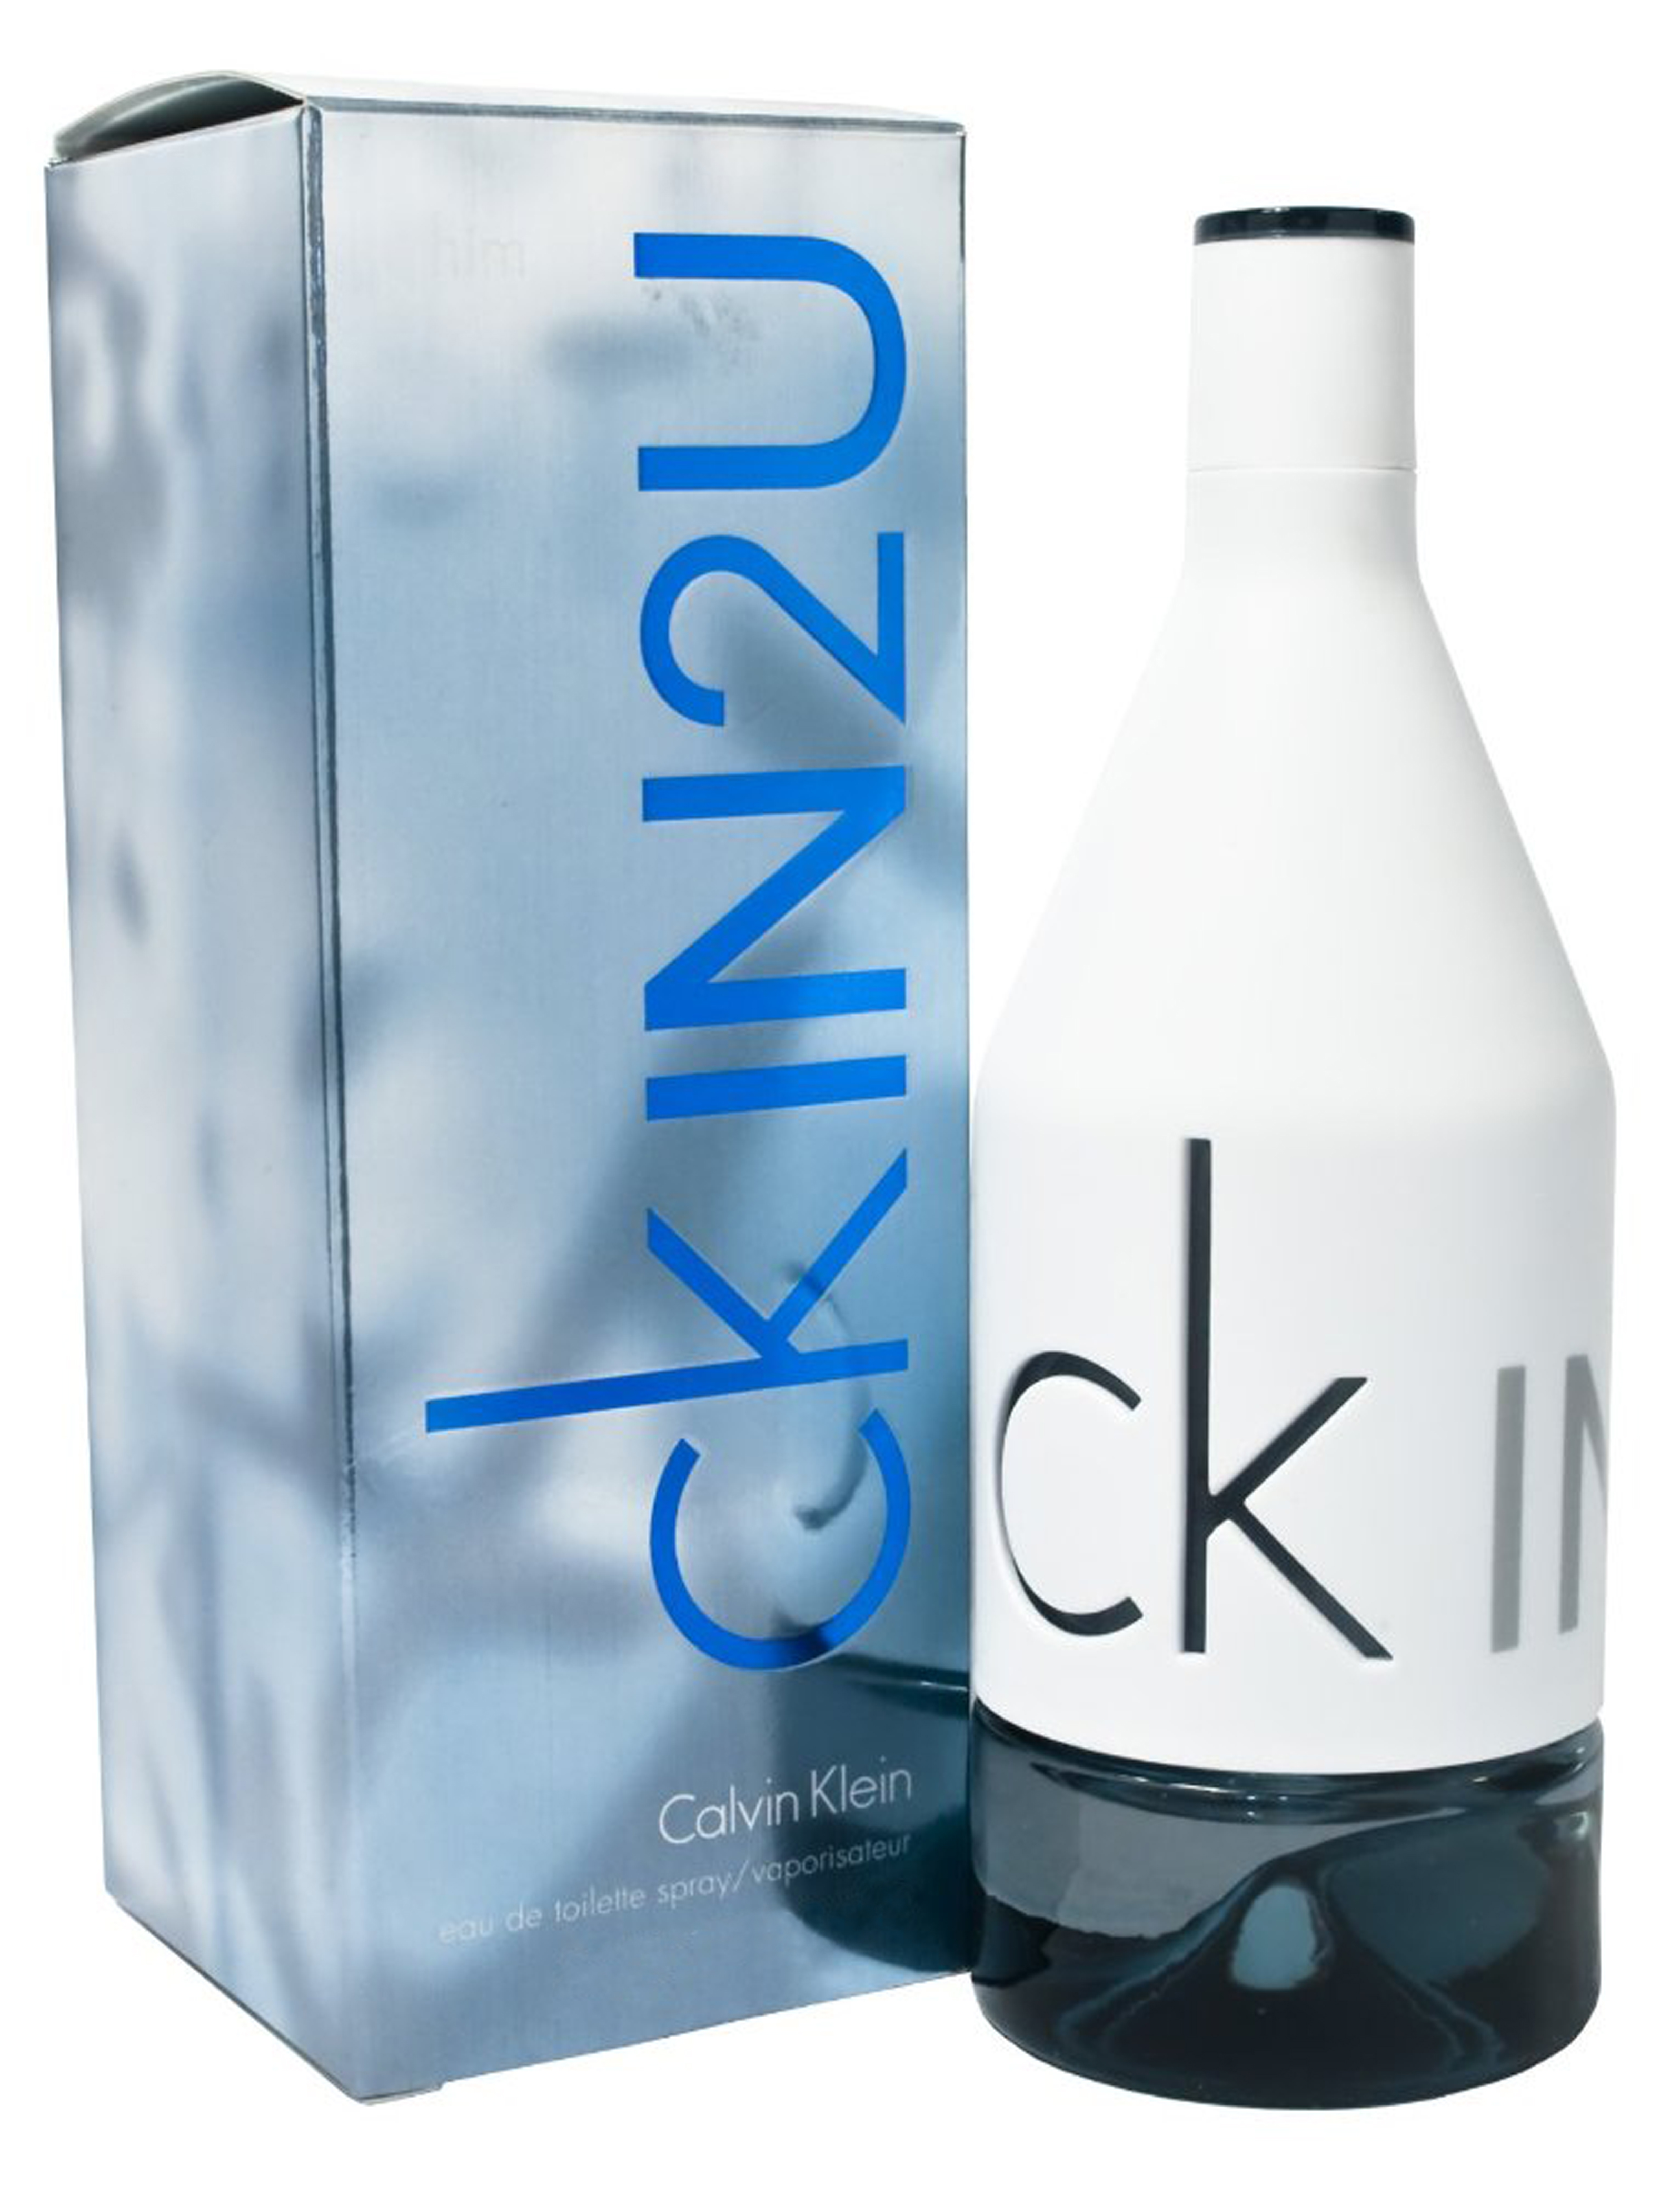 CKIN2U Edt de 100 ml